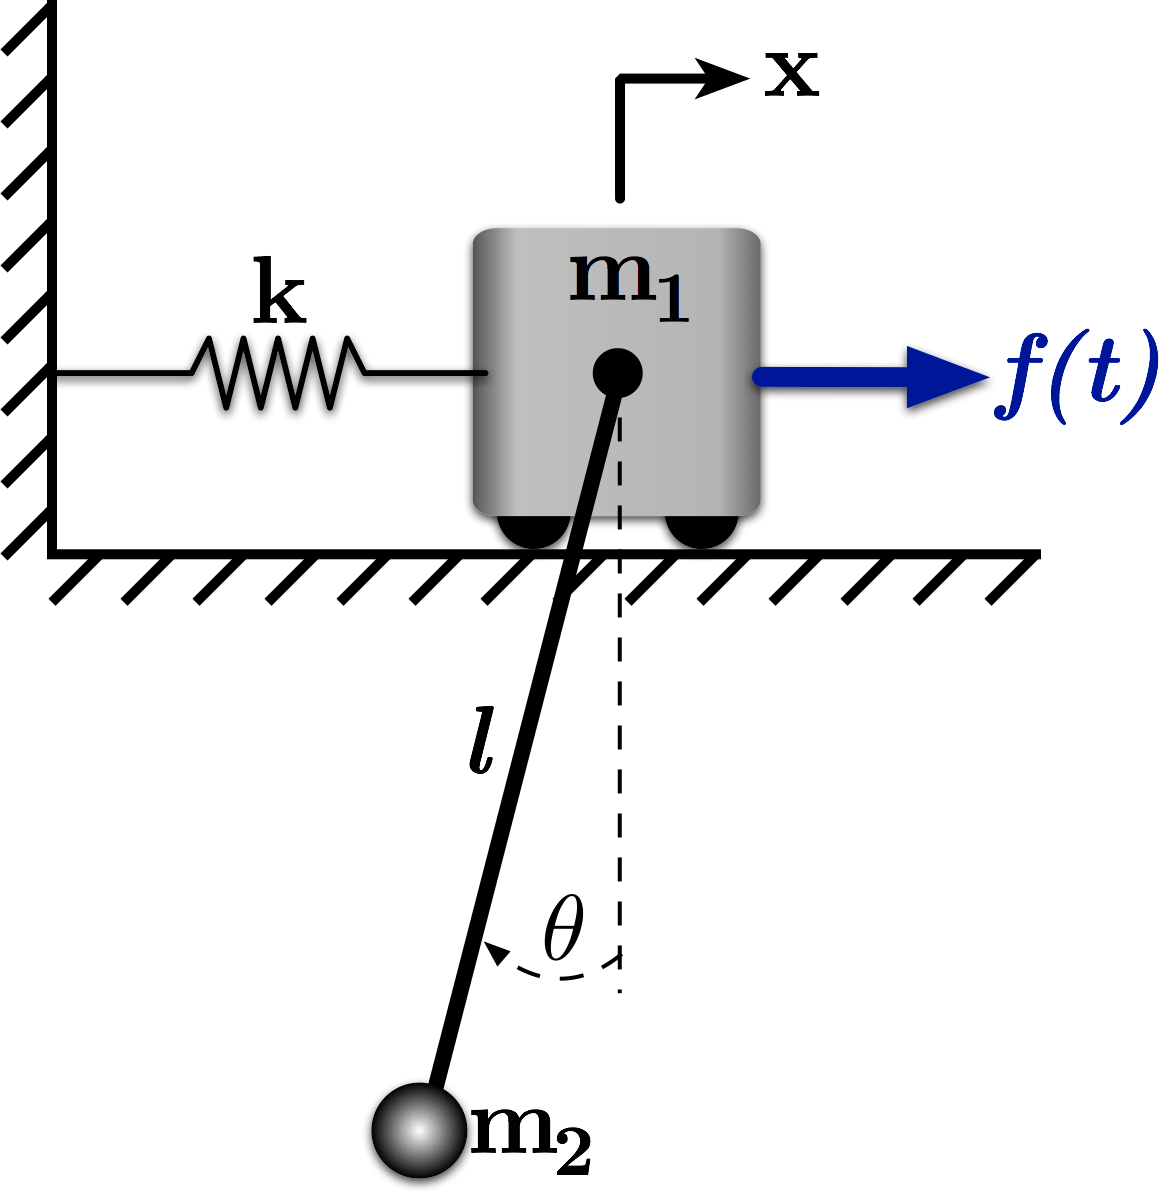 A Mass-Spring-Pendulum System